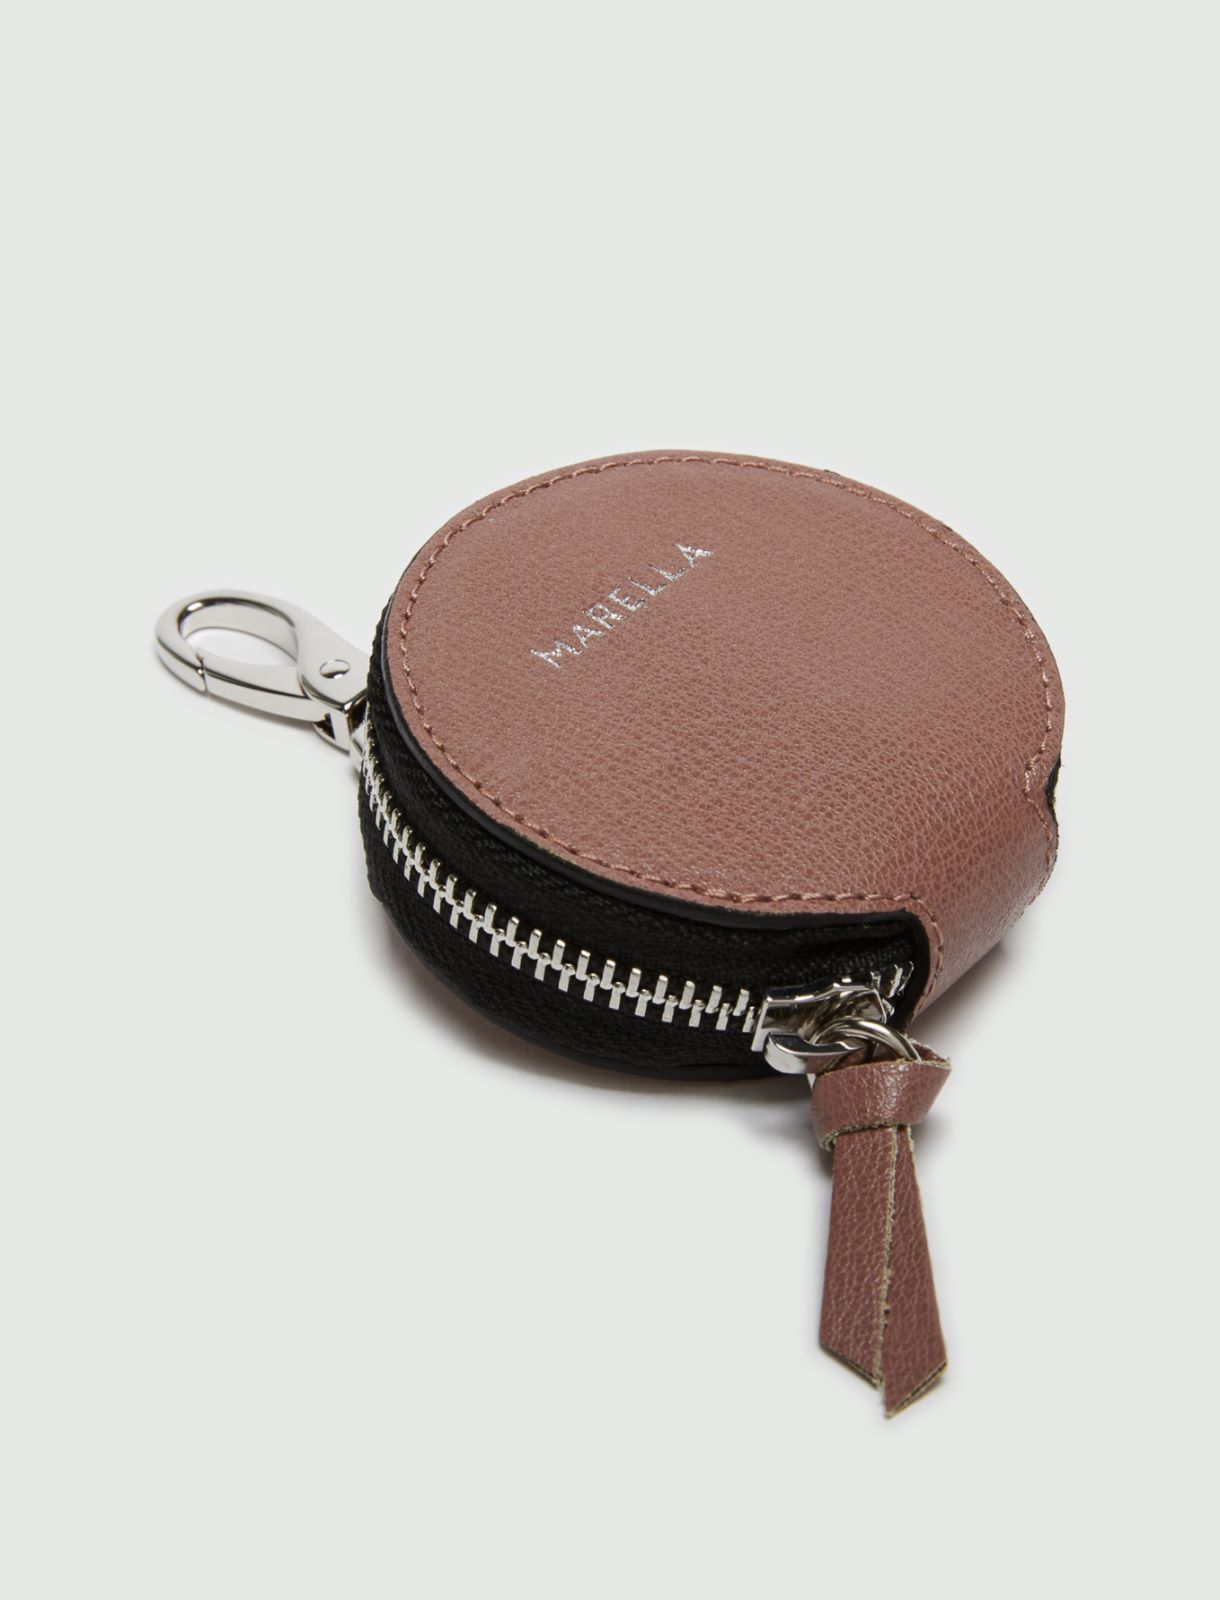 Leather coin purse  - Antique rose - Marella - 2